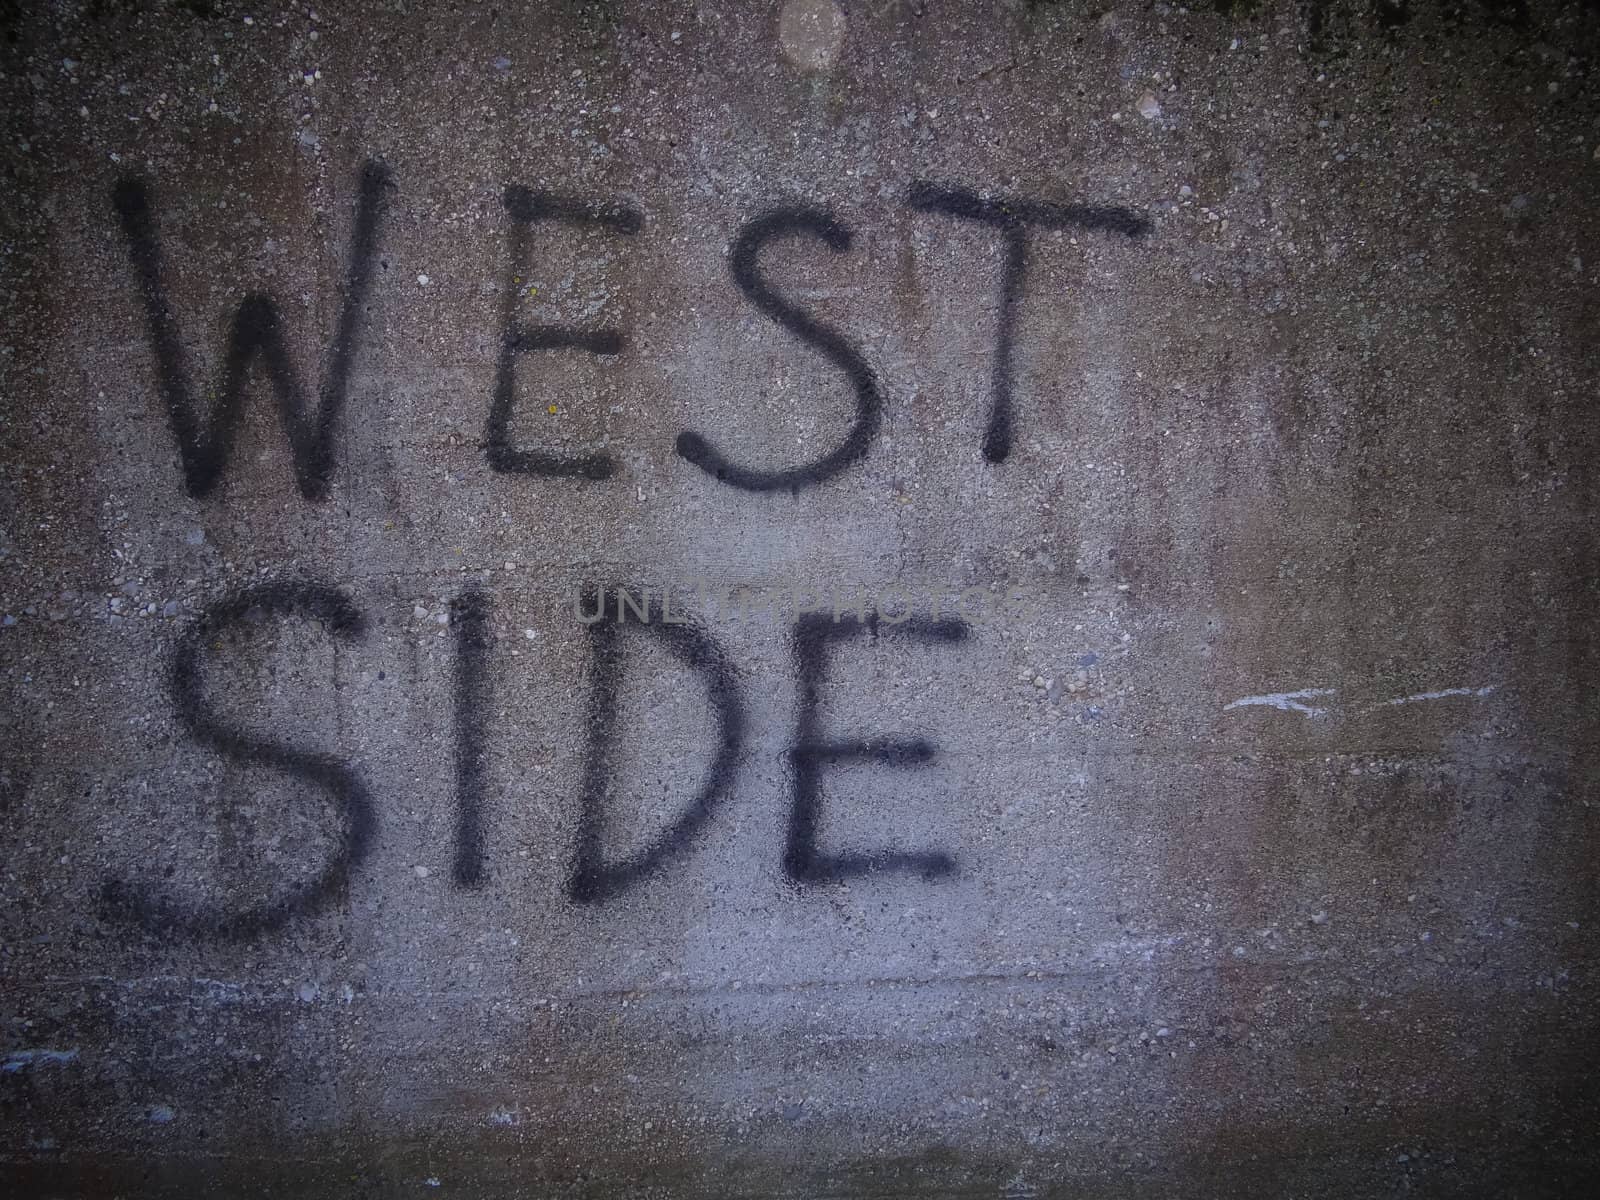 Graffiti Westside written on a cement wall